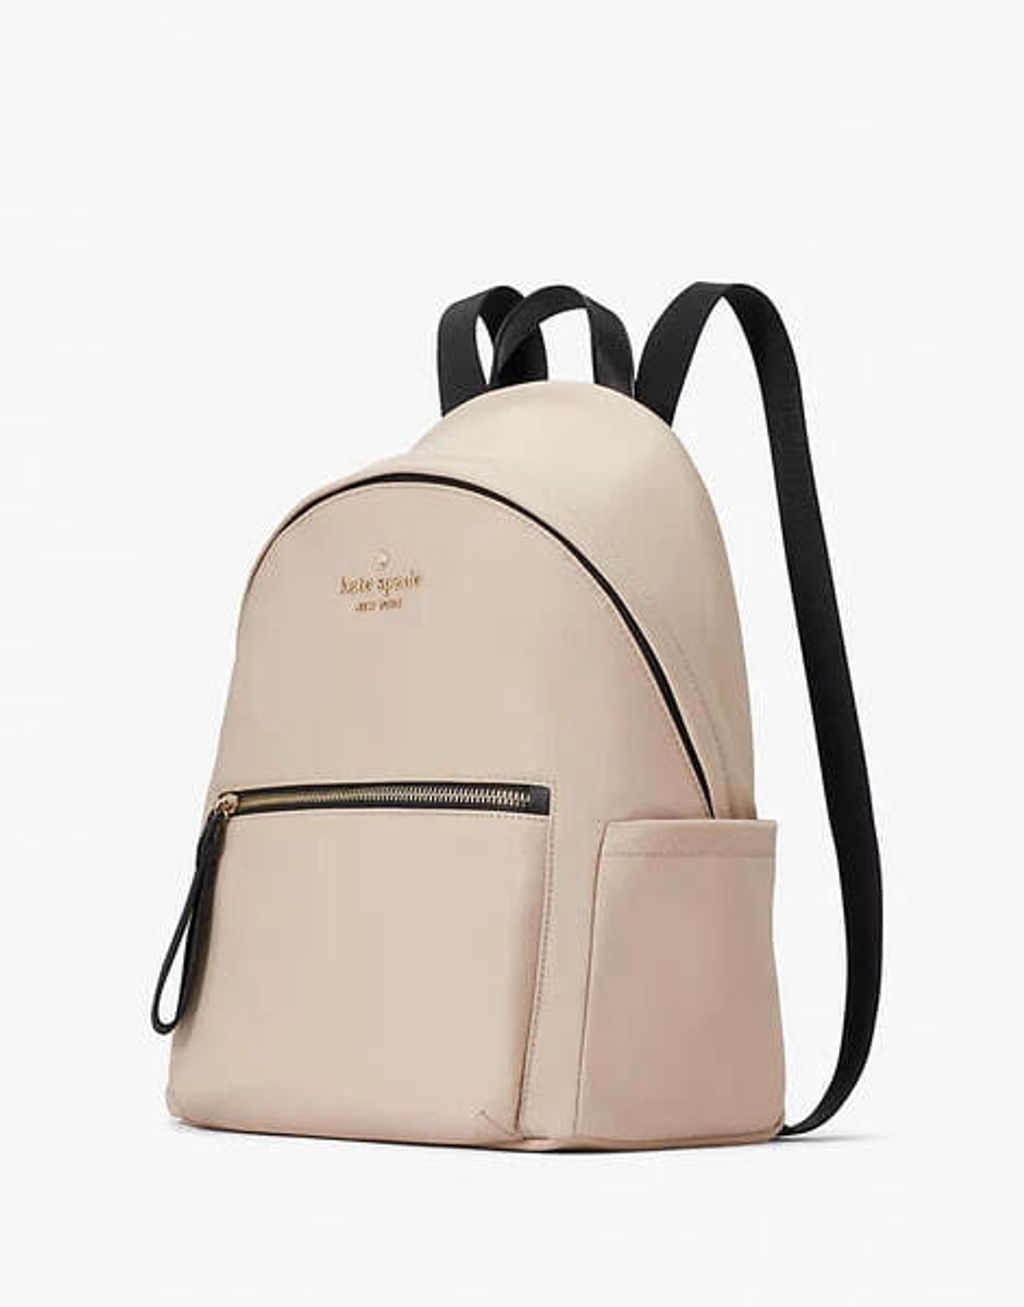 handbagbranded.com getlush outlet personalshopper usa malaysia ready stock coach malaysia  KATE SPADE Chelsea Medium Backpack 2